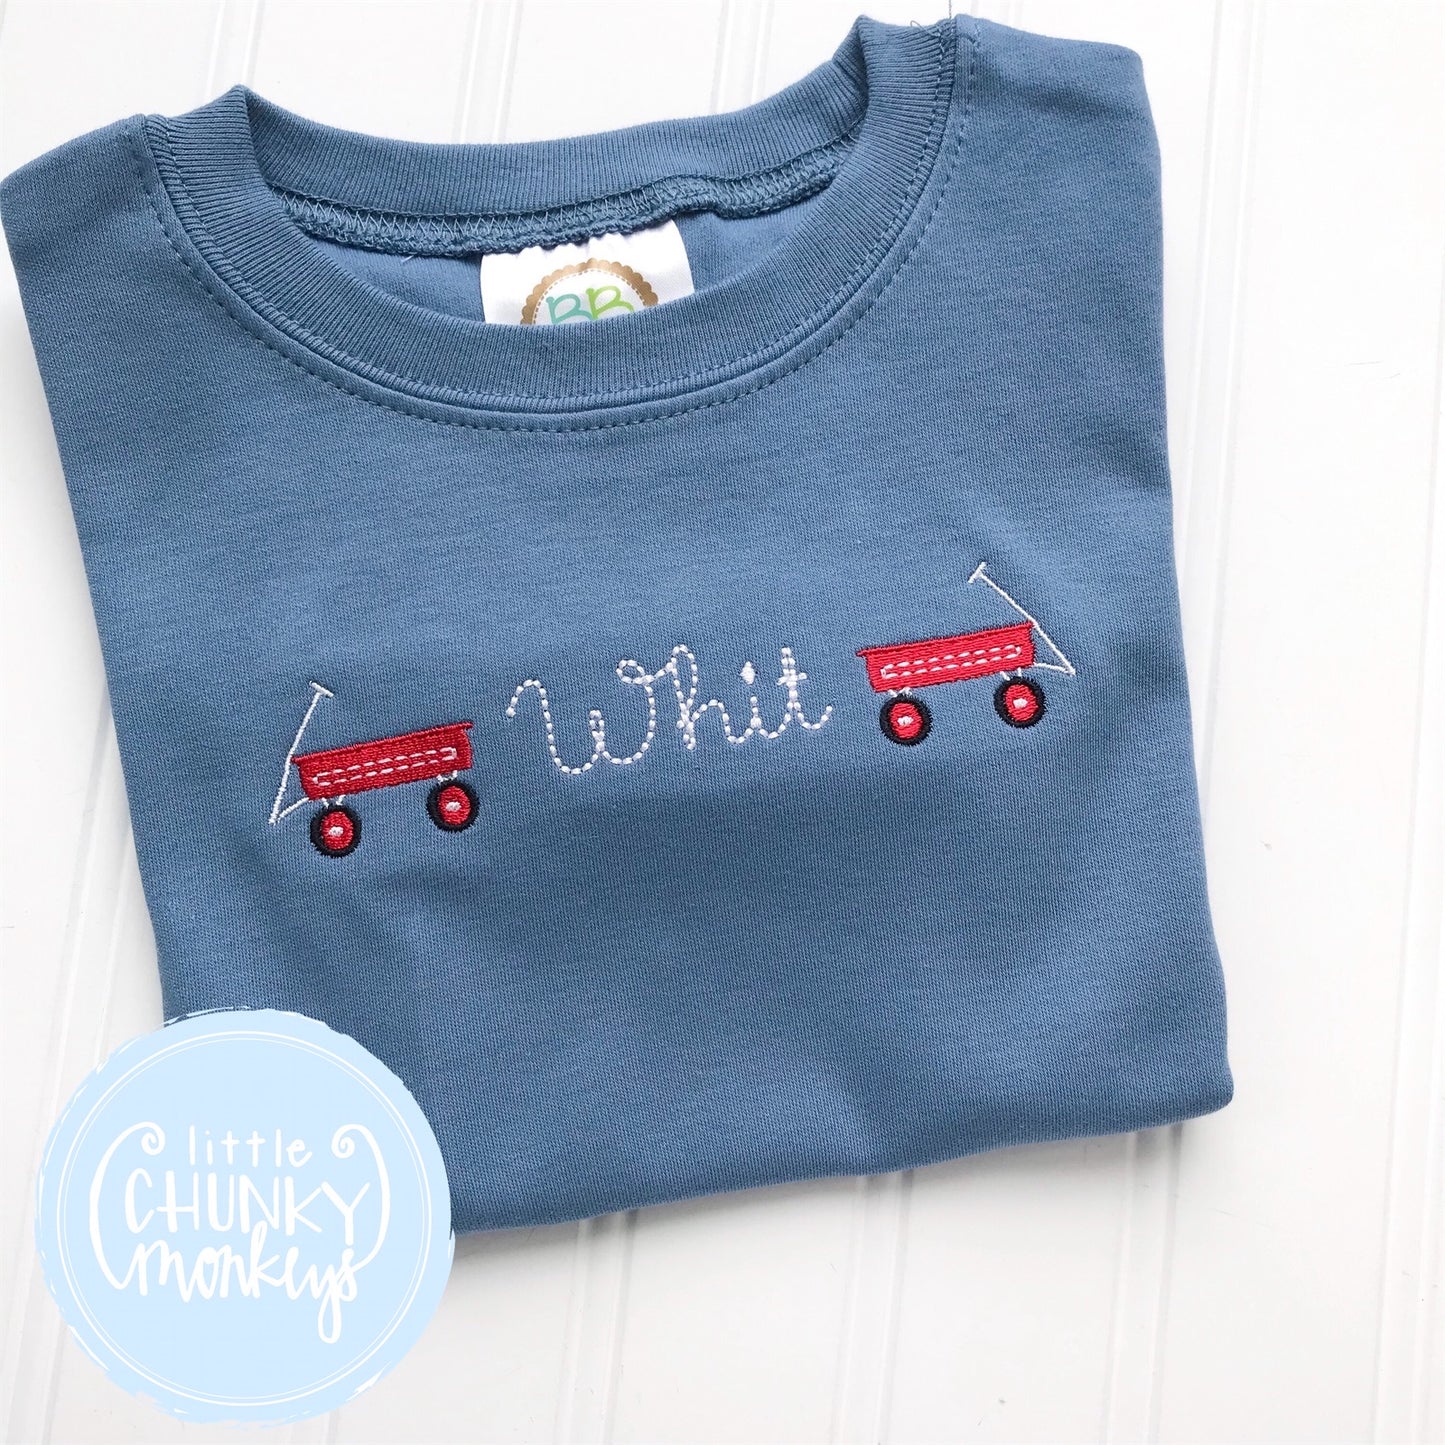 Boy Shirt - Mini Wagons with Personalization on Blue Shirt